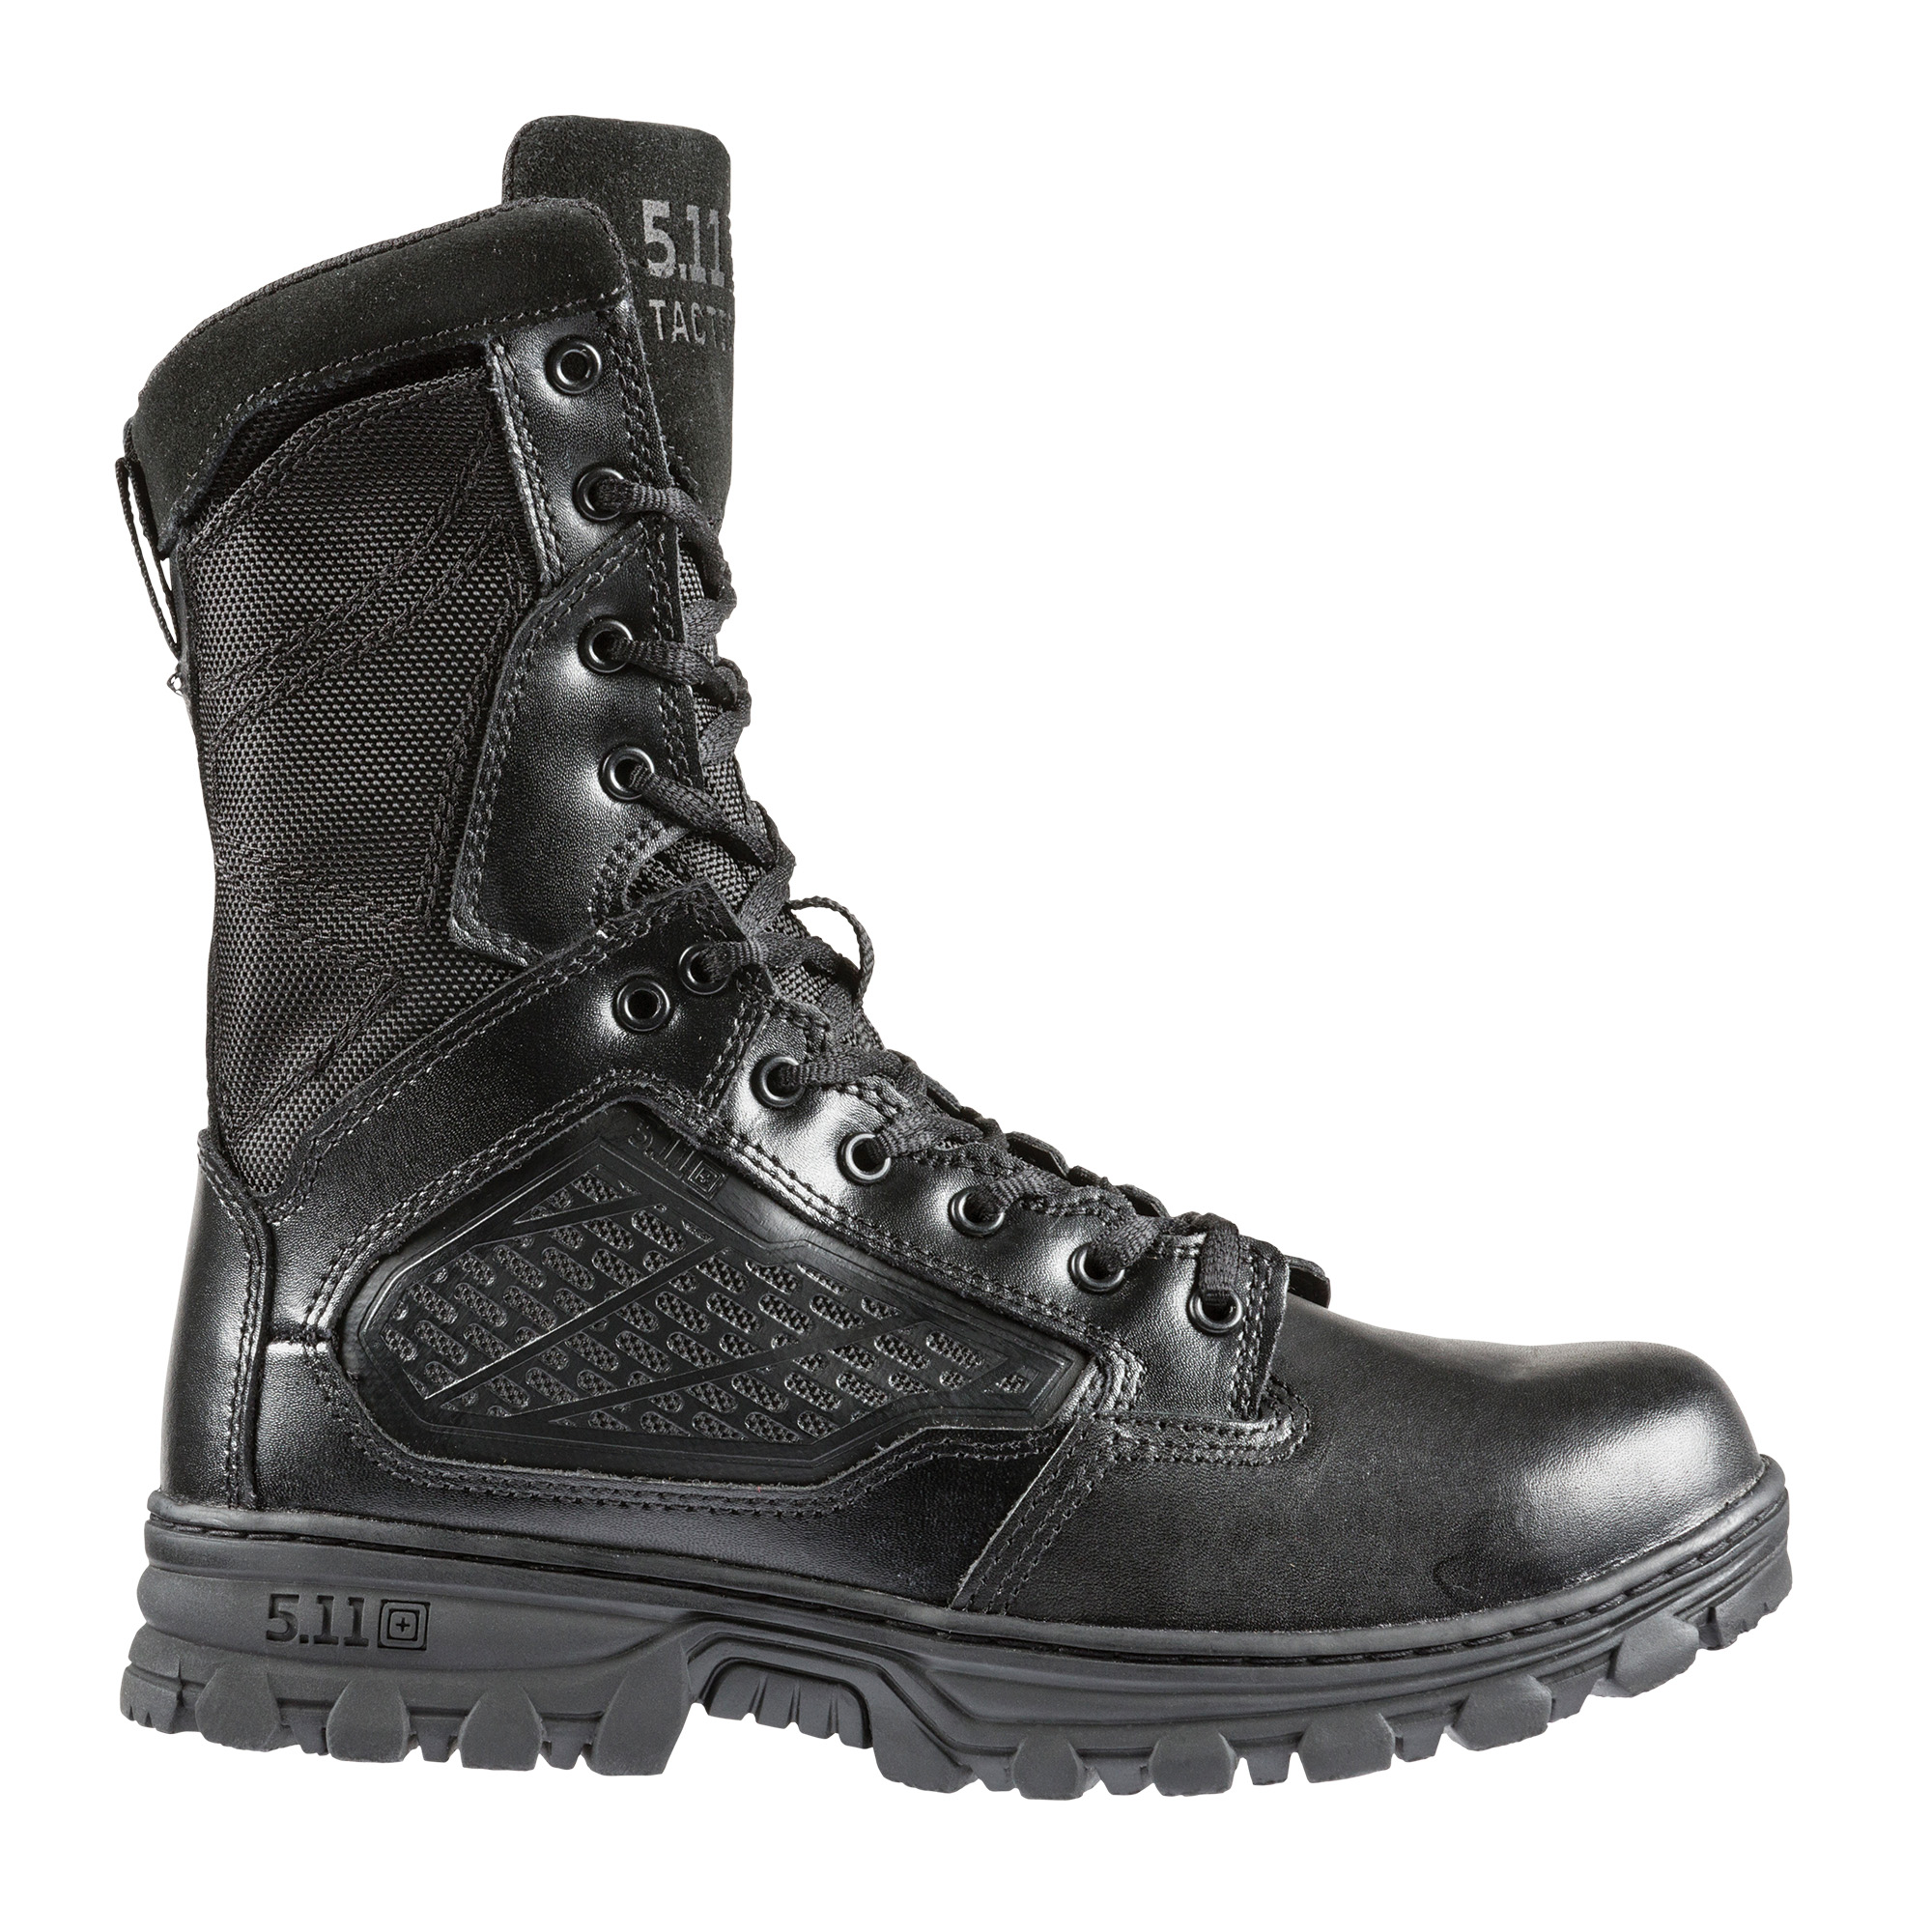 Evo 8'' boots w/side zip - Boots | Prefair